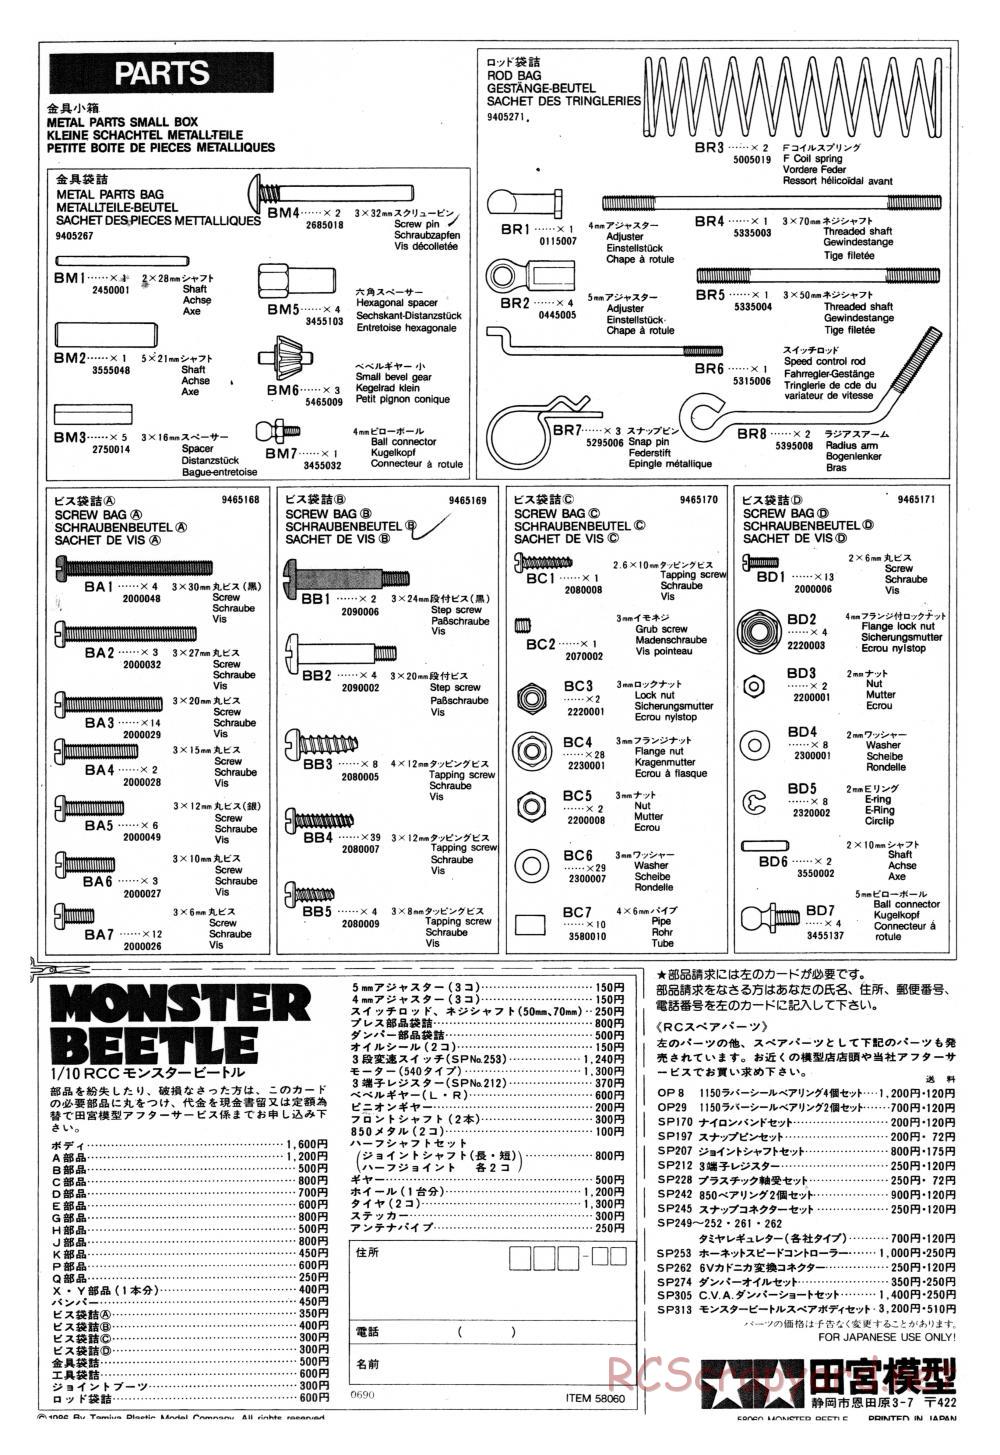 Tamiya - Monster Beetle - 58060 - Manual - Page 24